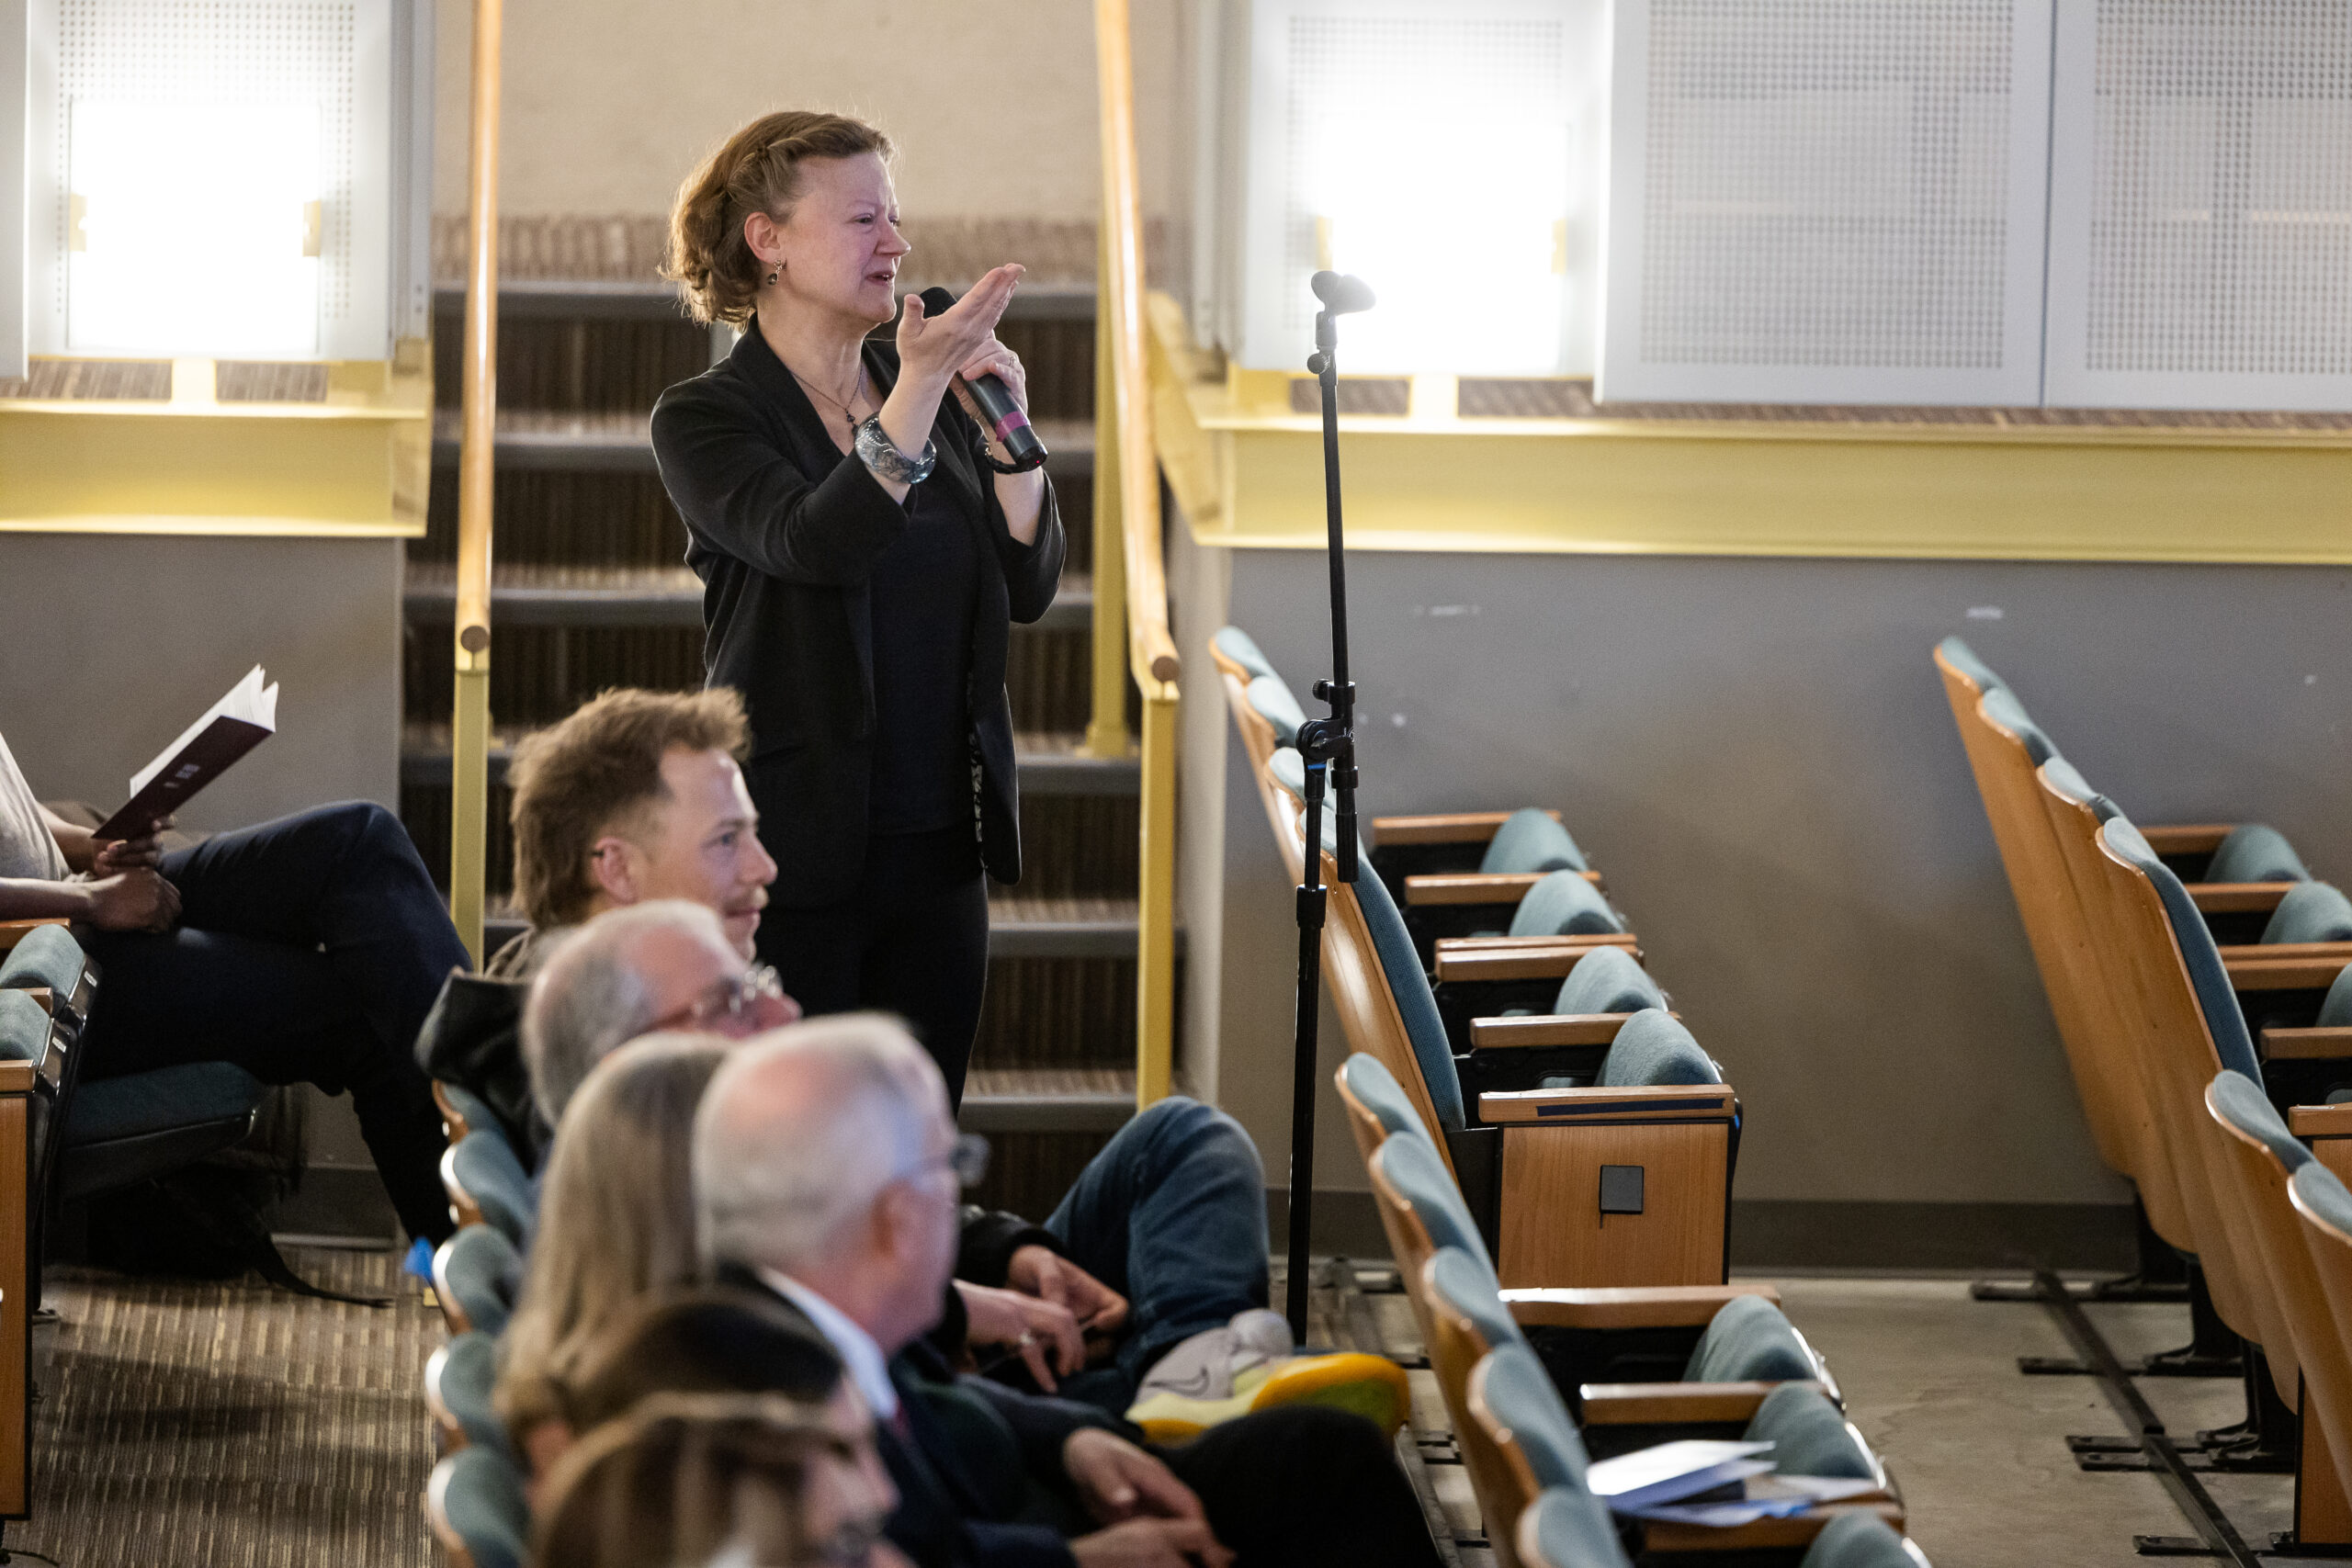 An audience member asks a question at an opera recital performance.